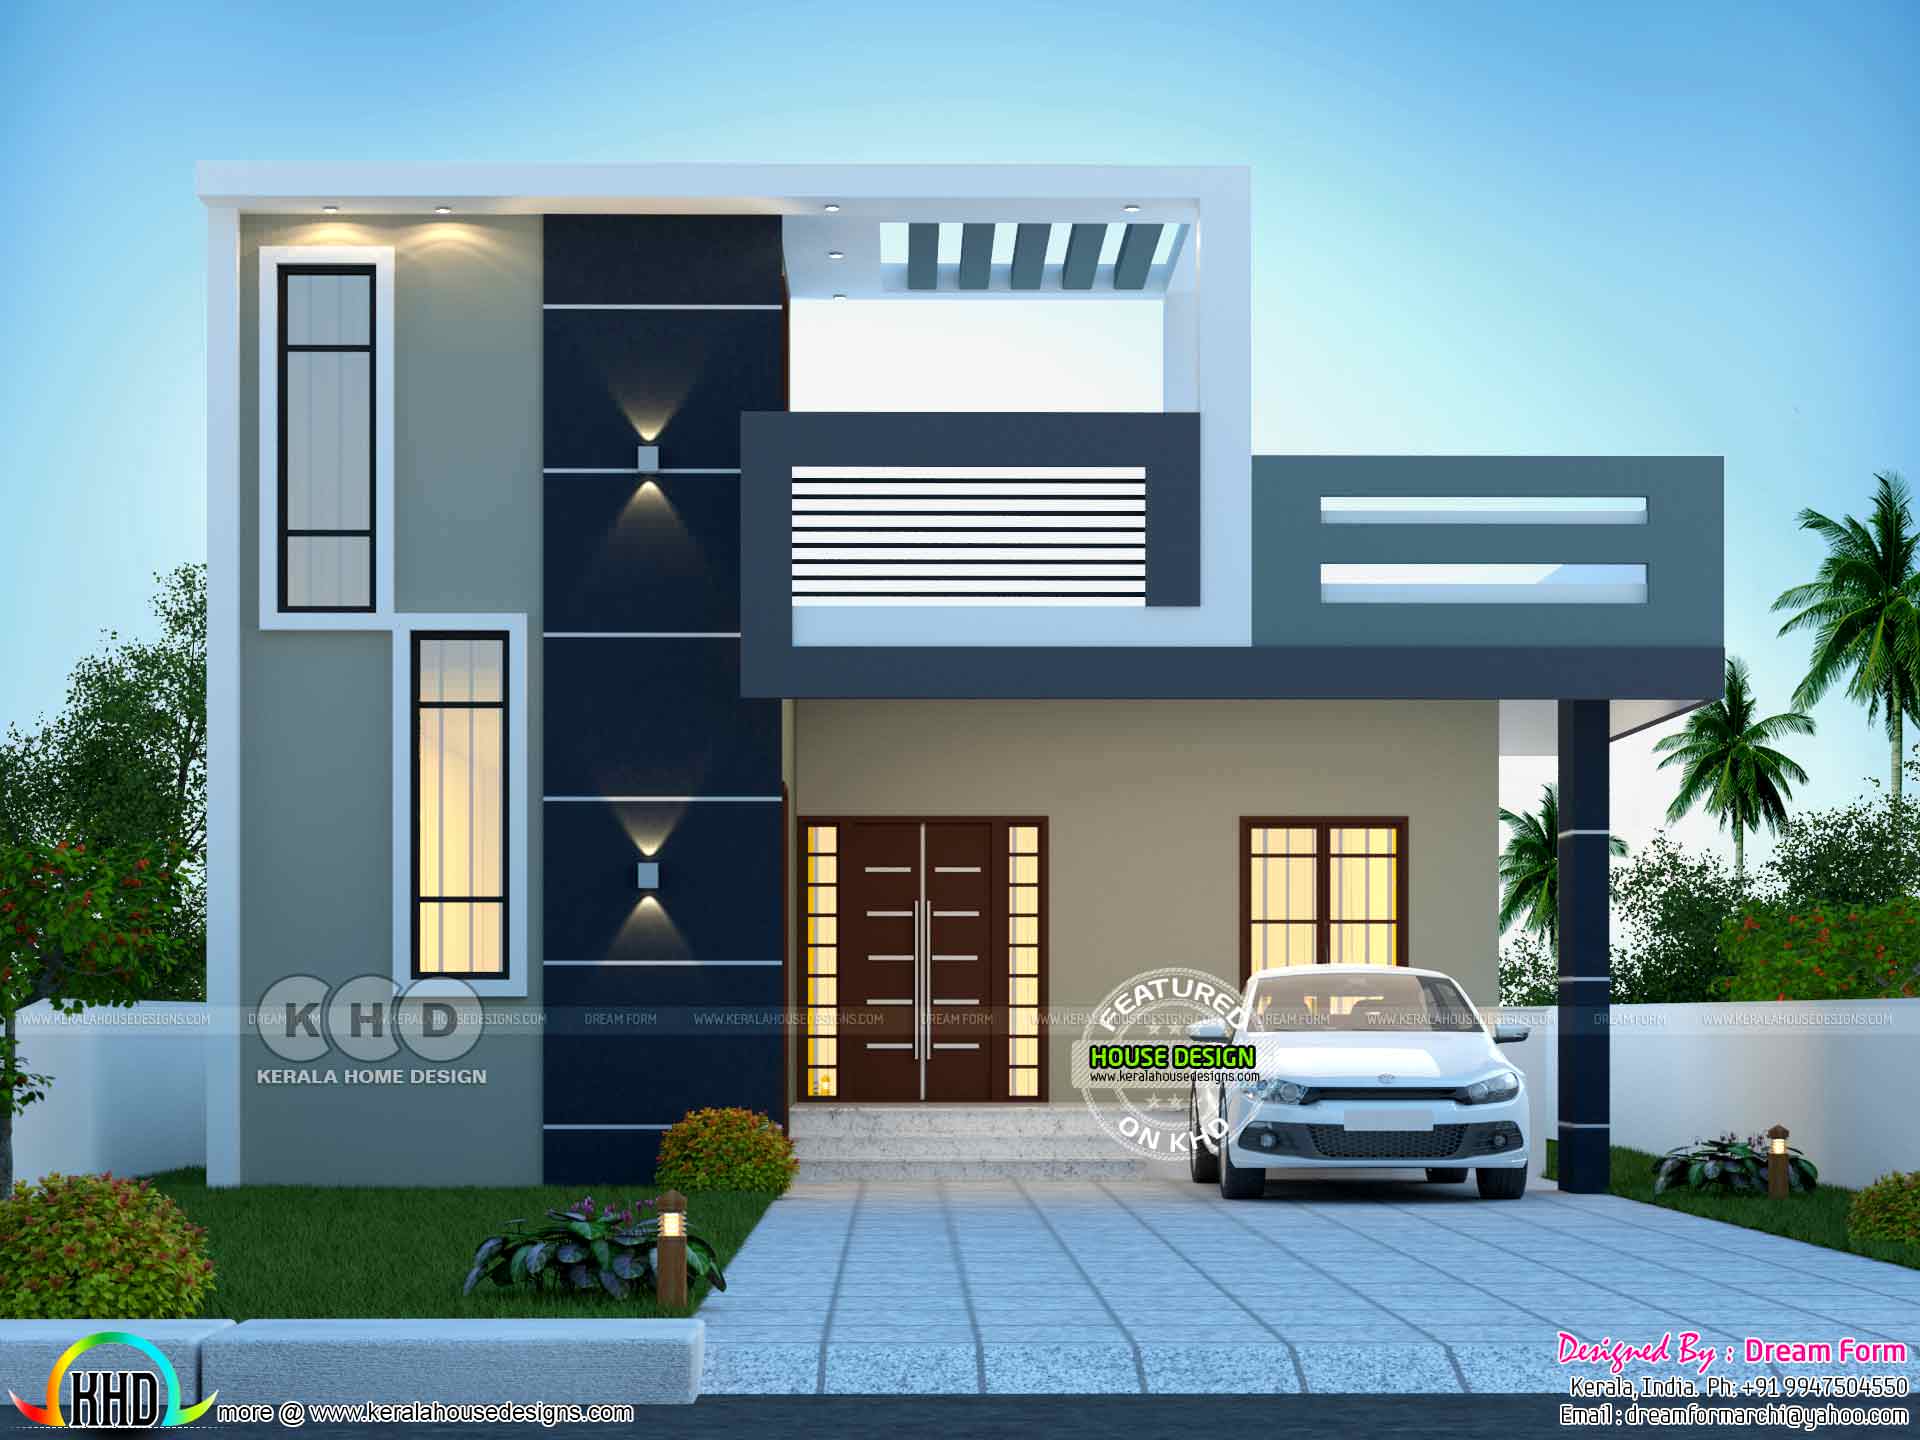 20 bedrooms 20 sq. ft. modern home design   Kerala home design ...